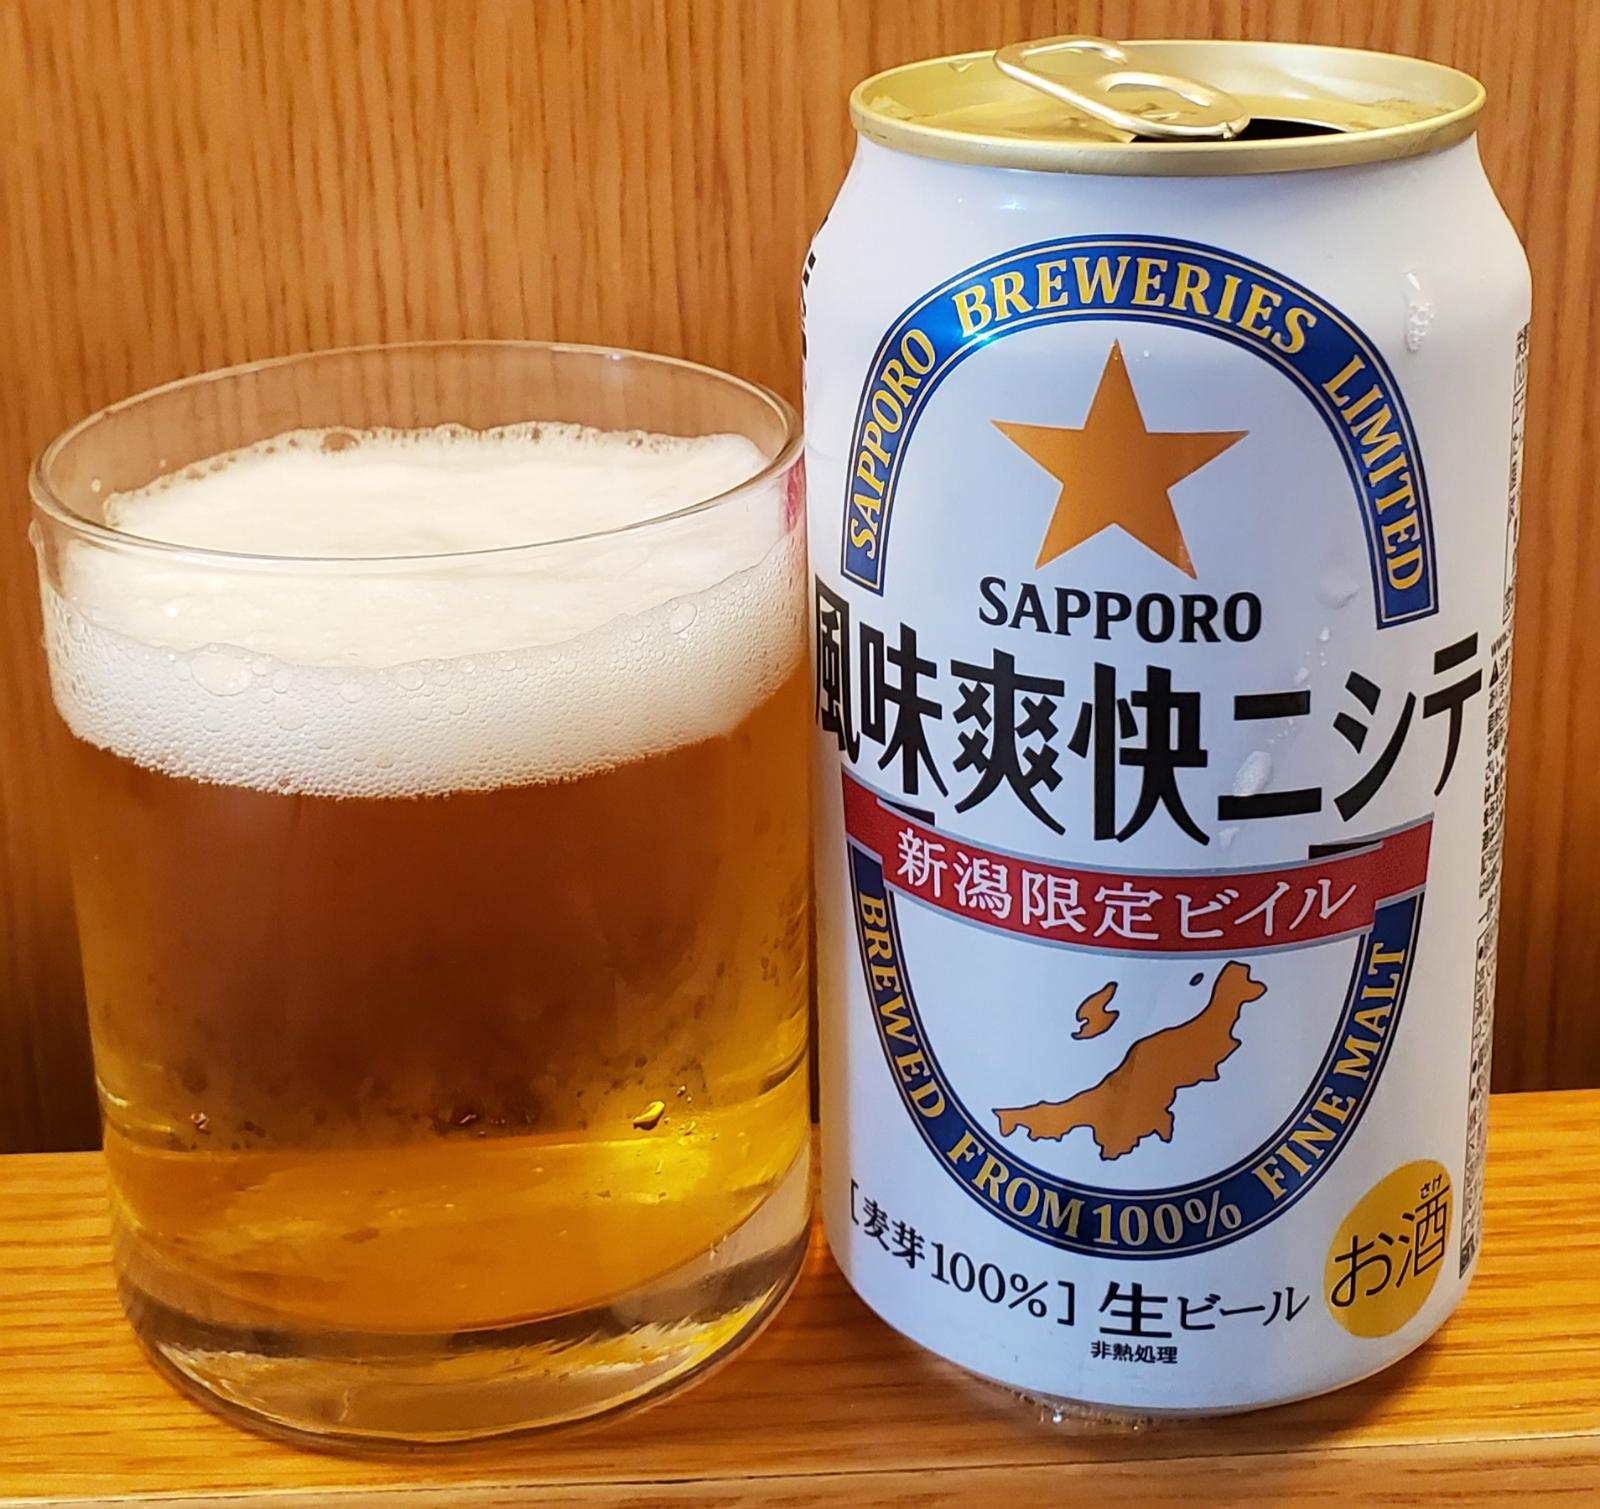 Sapporo Fuumi Soukai Nishite